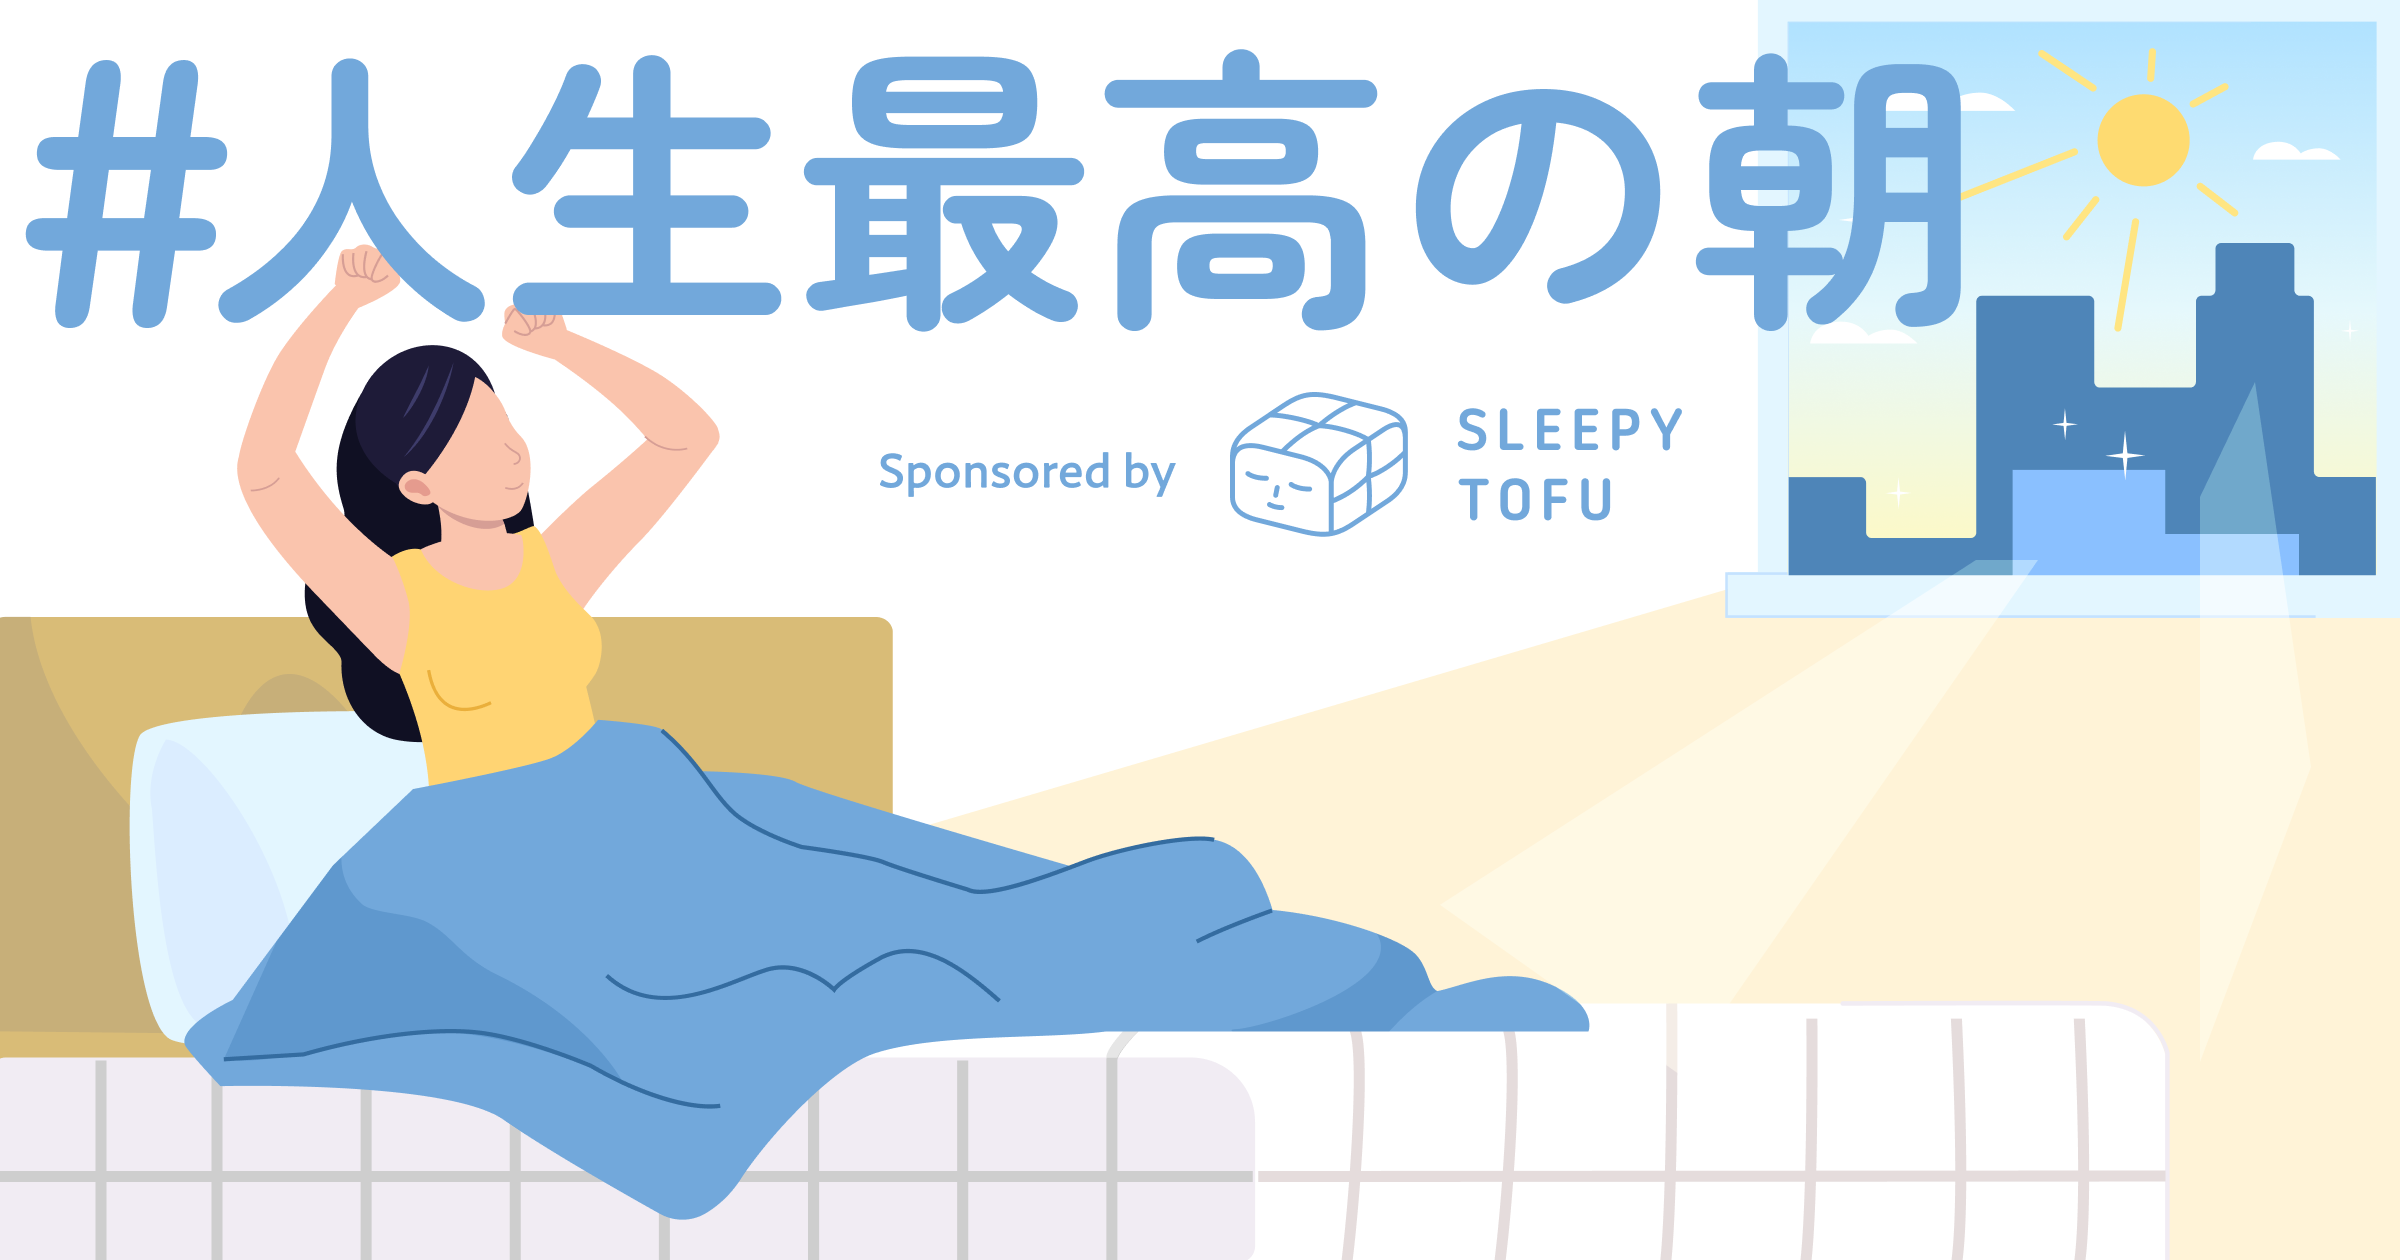 Voicy、睡眠の日に合わせて寝具ブランド「Sleepy Tofu」とともに音声特集「#人生最高の朝」を実施。